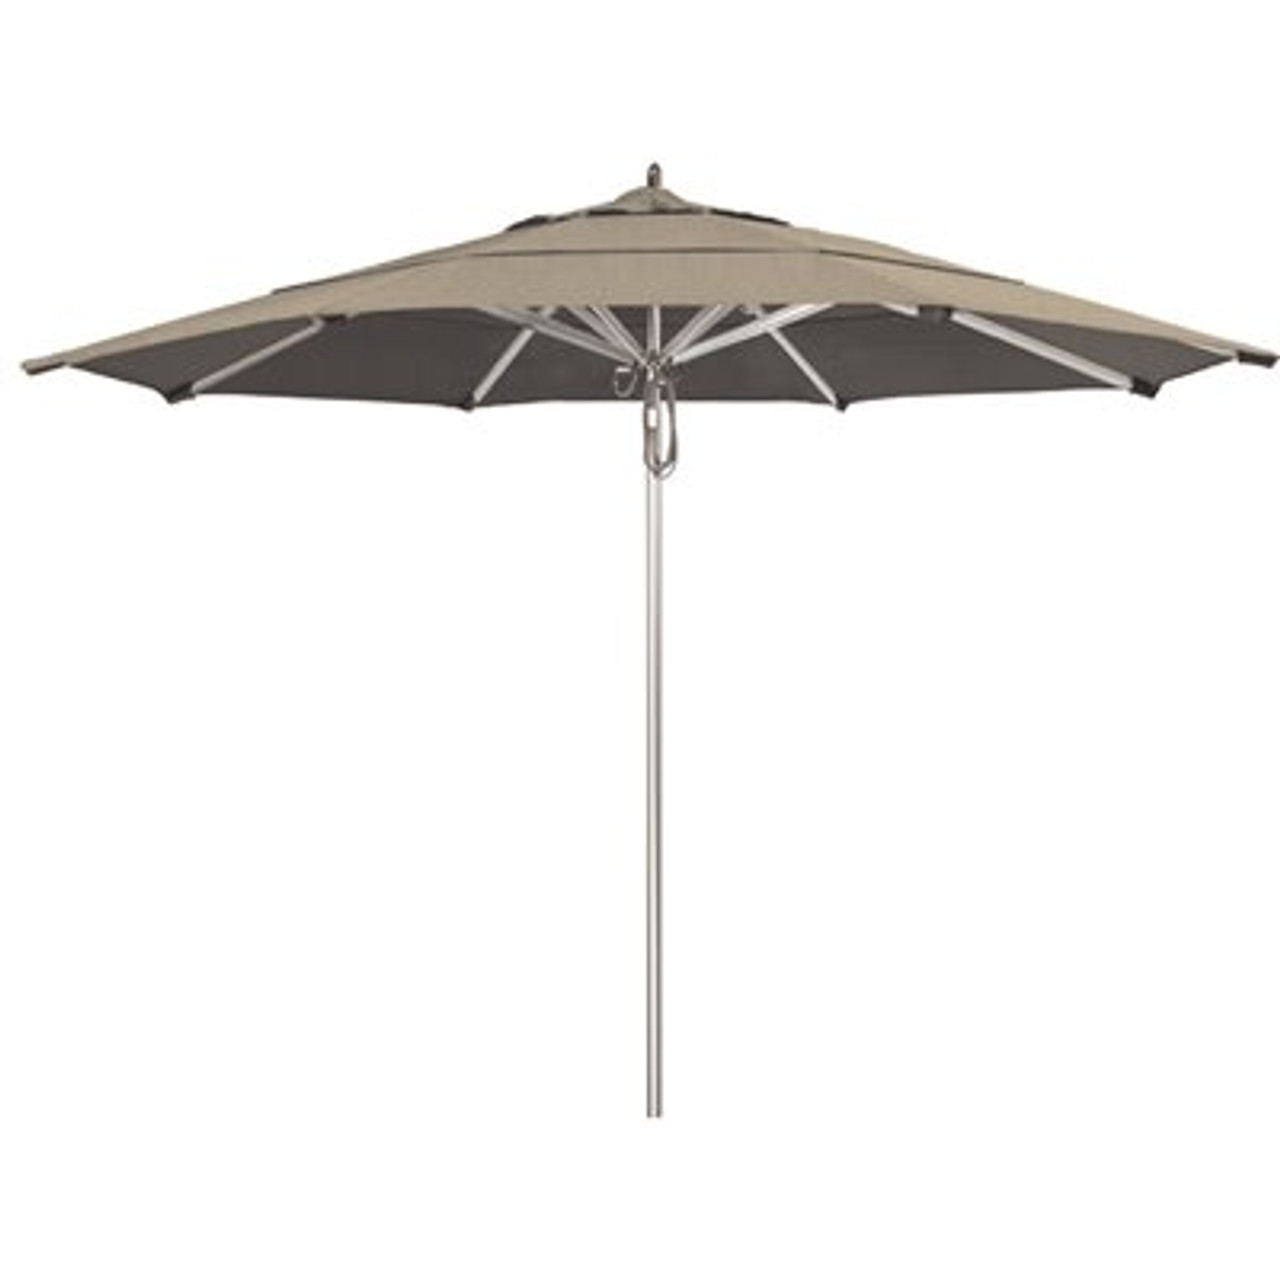 California Umbrella 11 ft. Silver Aluminum Commercial Market Patio Umbrella with Pulley Lift in Spectrum Dove Sunbrella